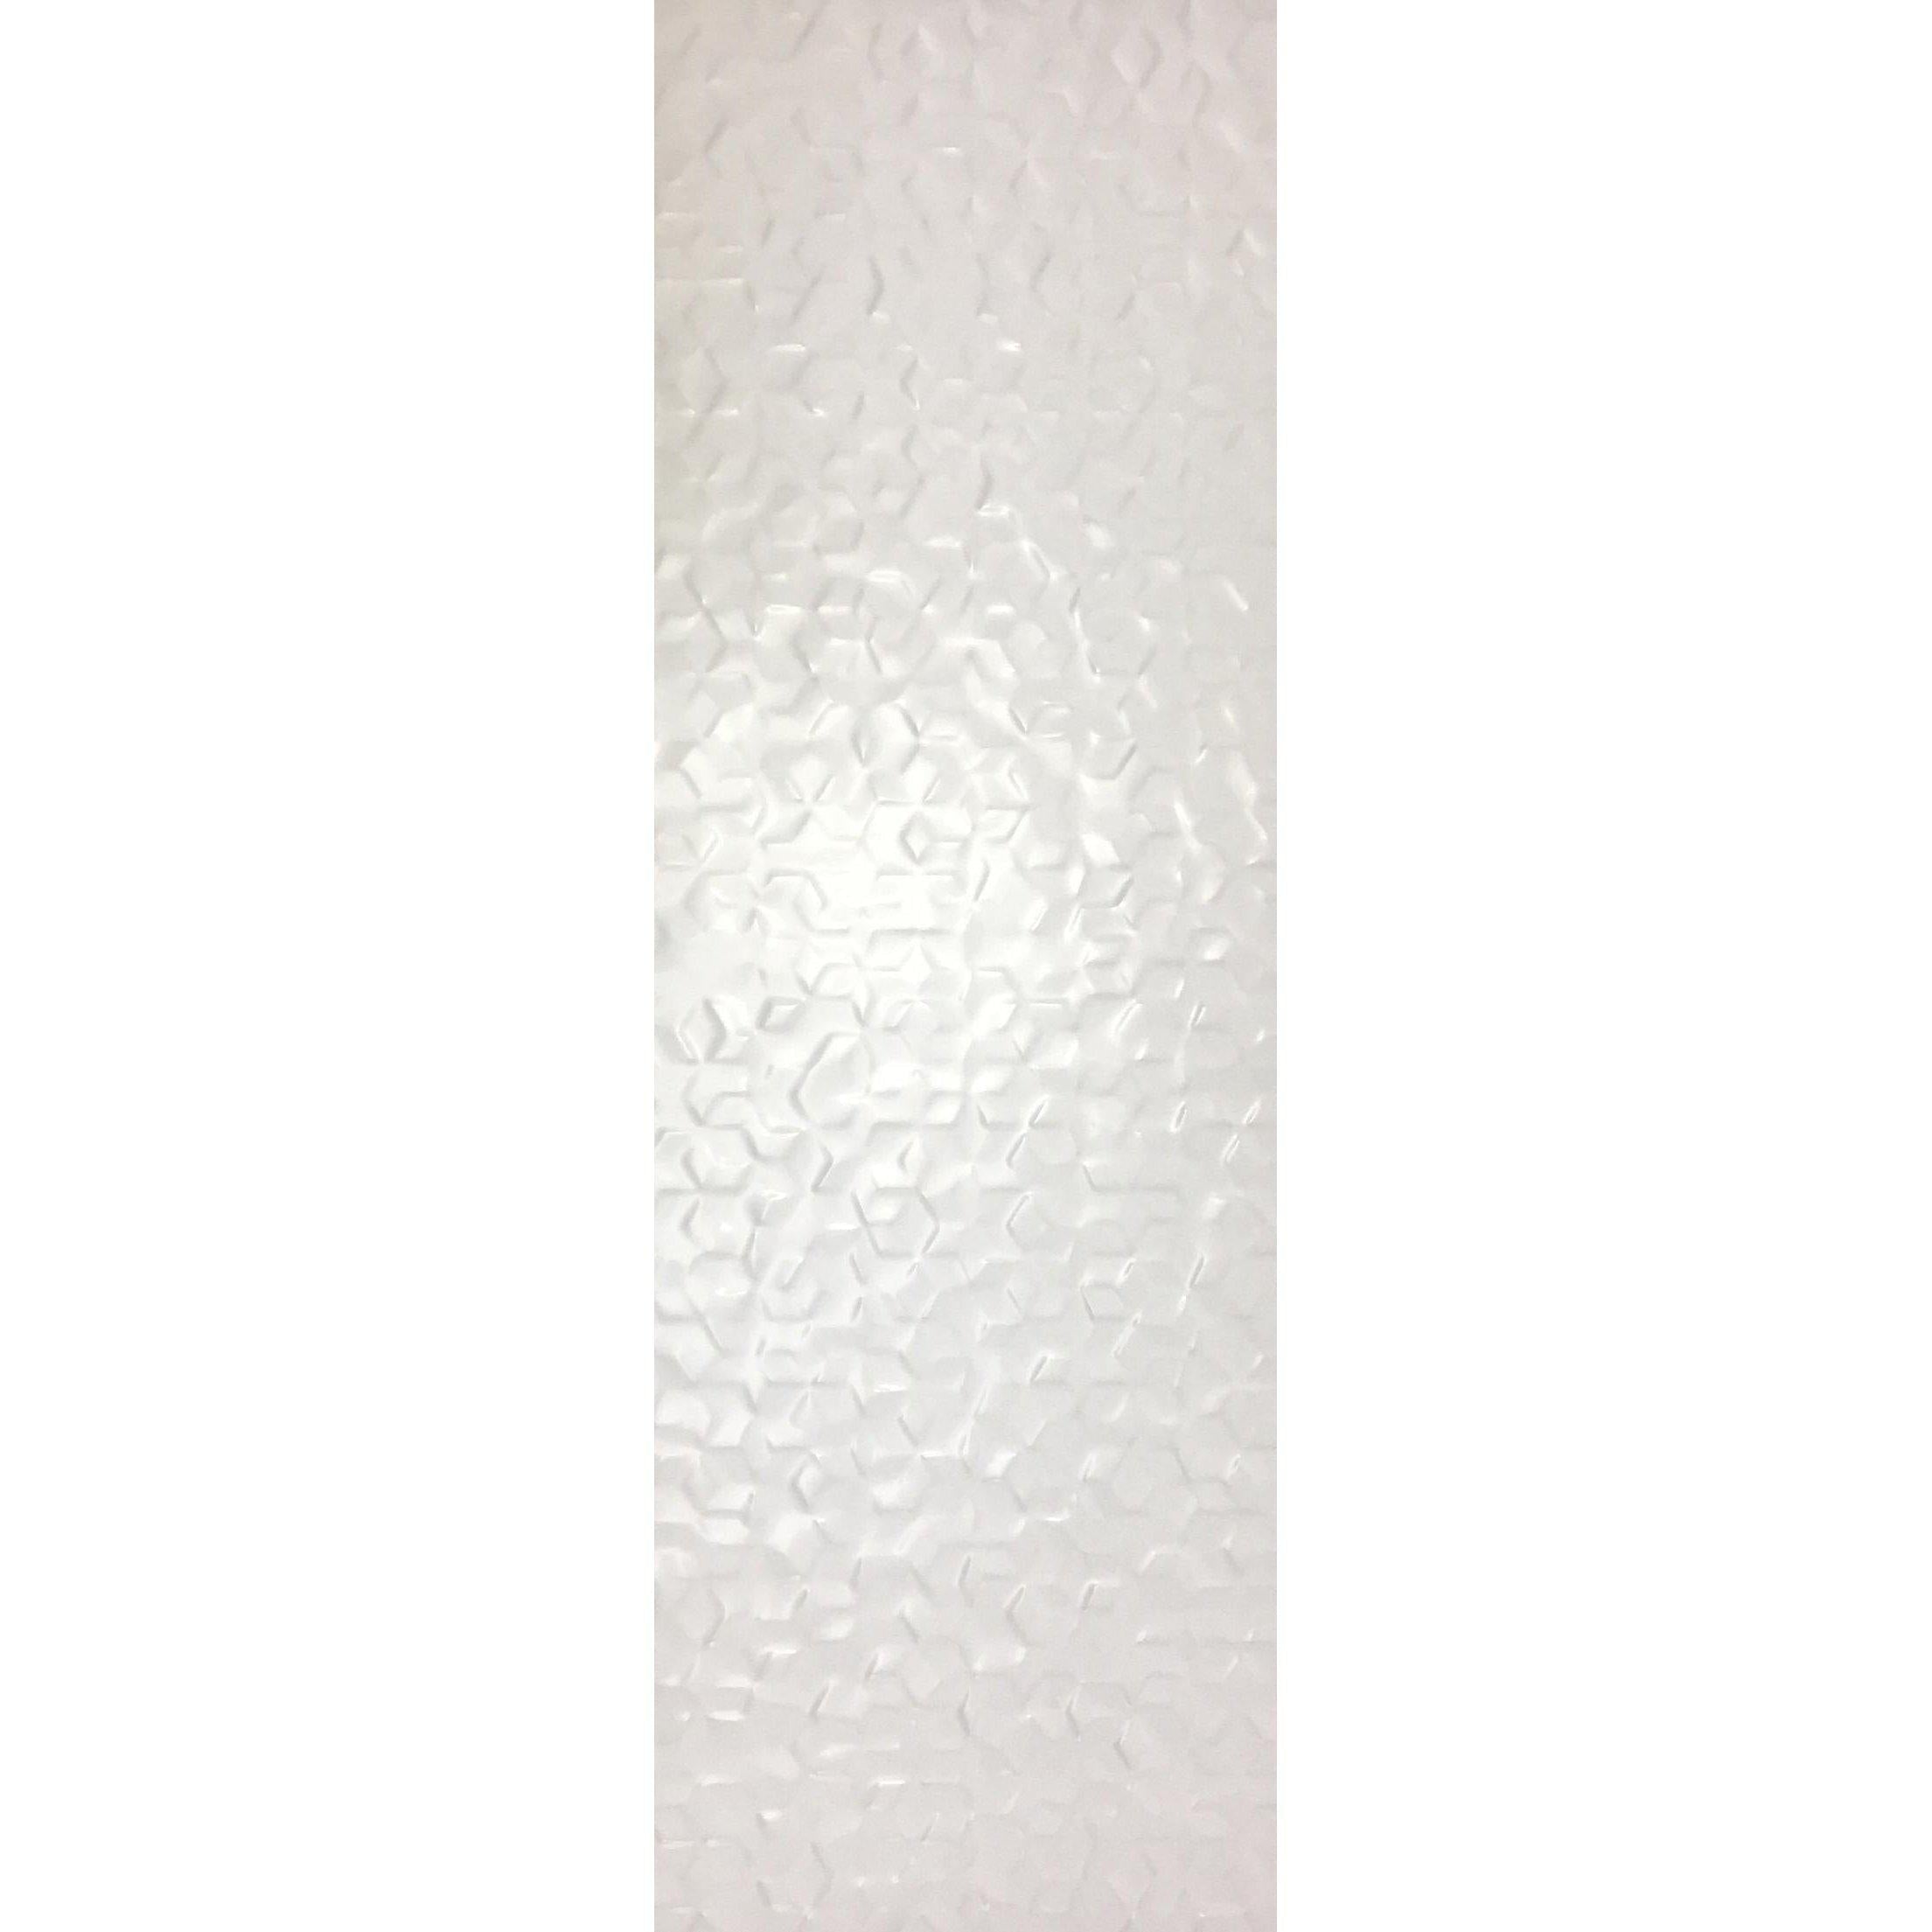 Tile 30x90cm HL9306-H Satin White-Flooring & Carpet-Archies Hardware-1.62𝑚²-6-diyshop.co.za